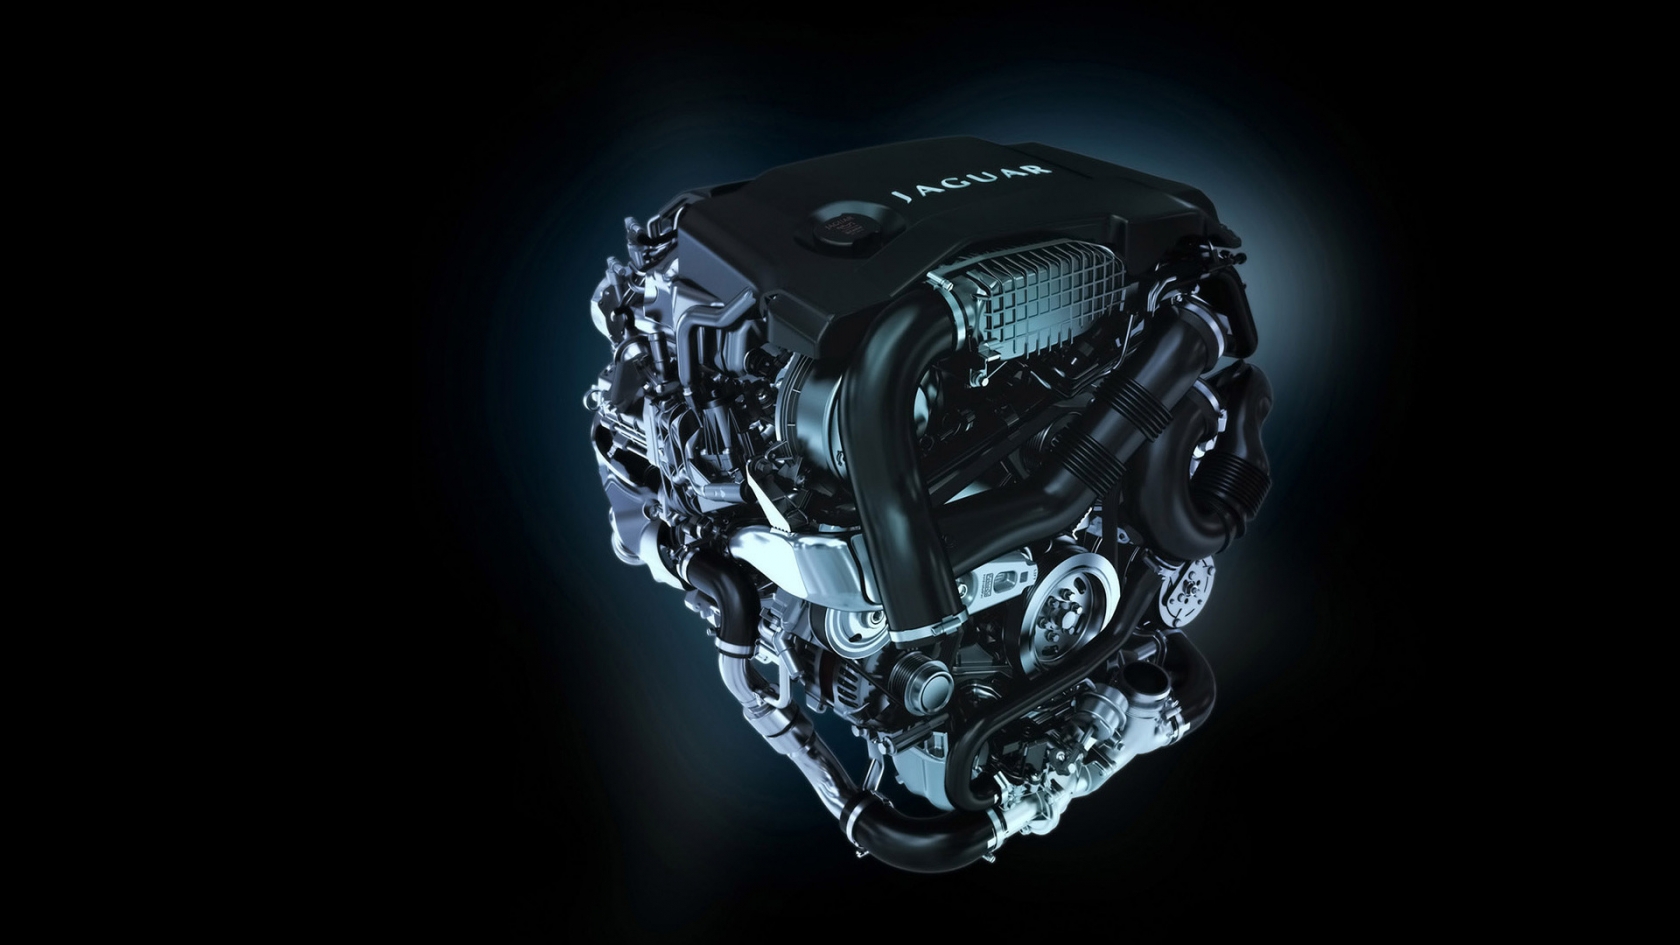 Jaguar XF Diesel S Engine for 1680 x 945 HDTV resolution